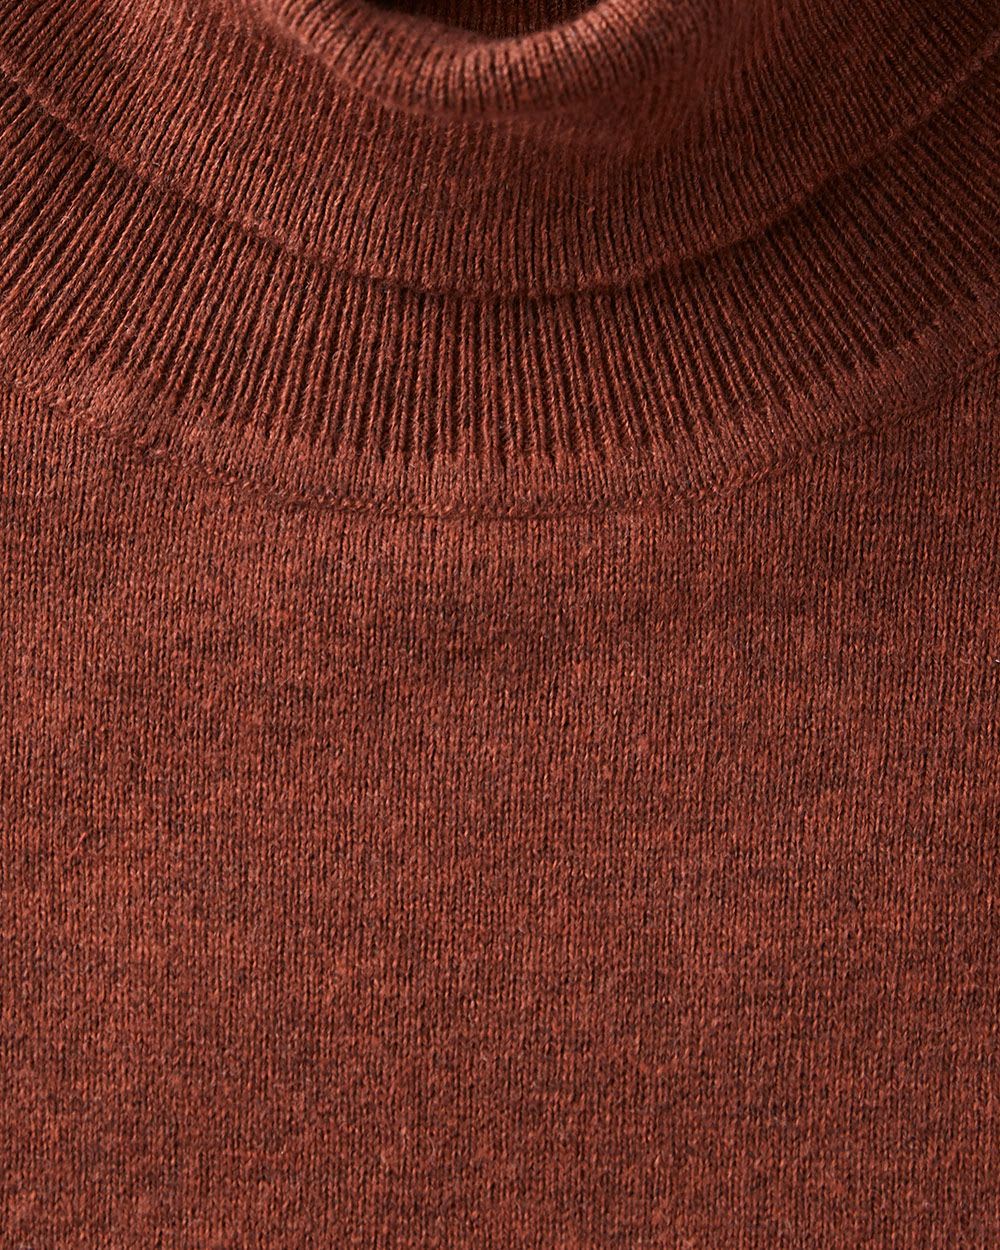 Lightweight Turtleneck Sweater